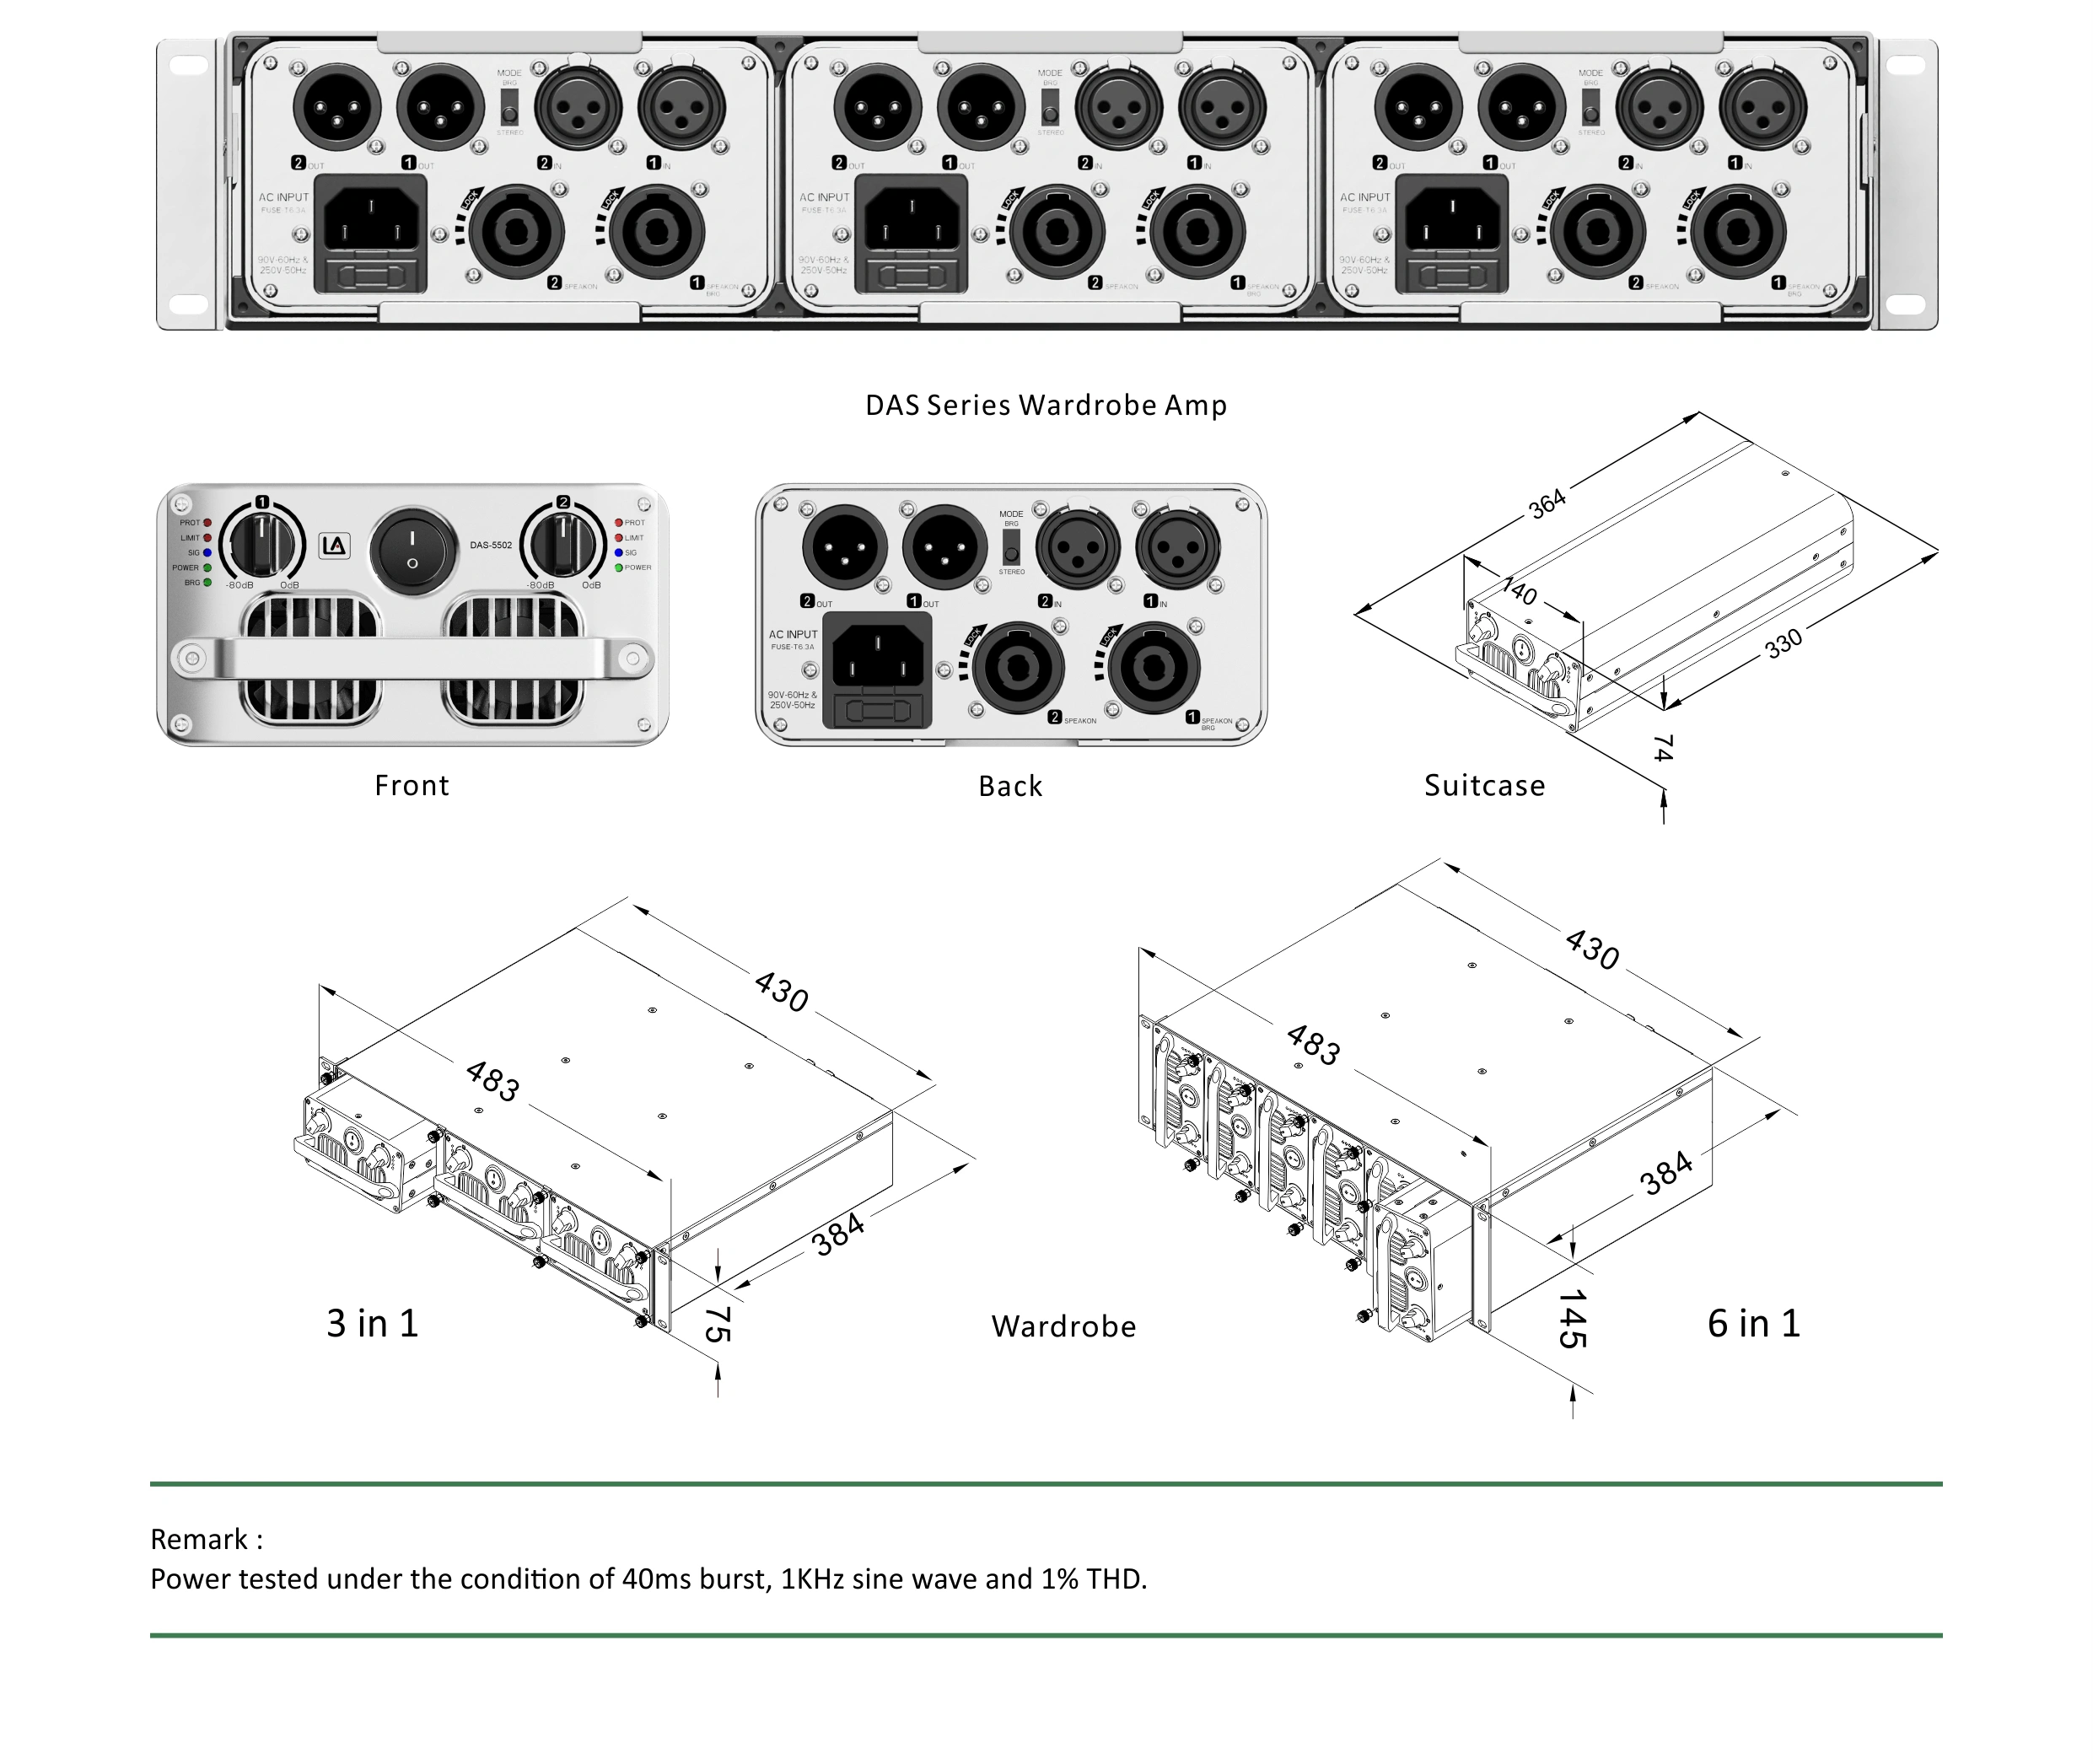 Subwoofer Amp, Class-D Amplifier, DAS Series class d amplifier with dsp, amplifier speaker class d,1U Rack Amplifier, Class D Power Amp DAS Series, Wardrobe Amplifier, Portable Amplifire